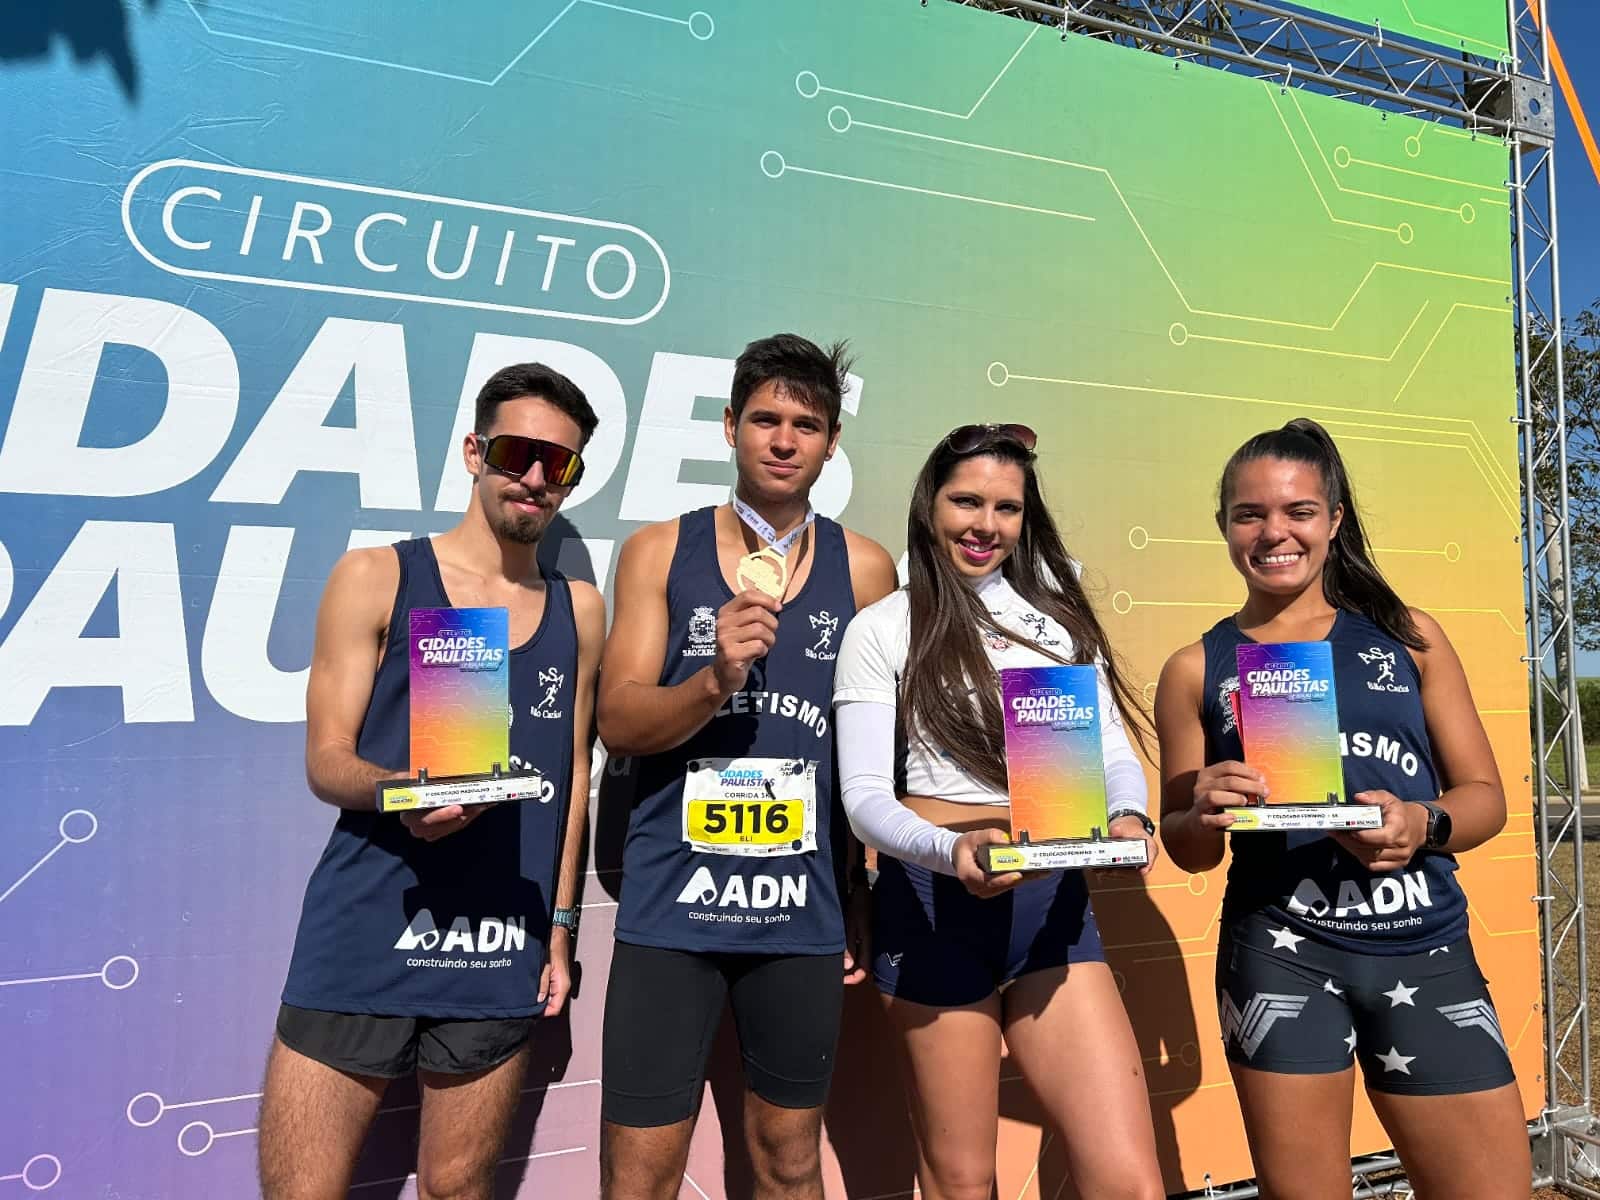 ASA/ADN comemora três pódios no Circuito Cidades Paulistas